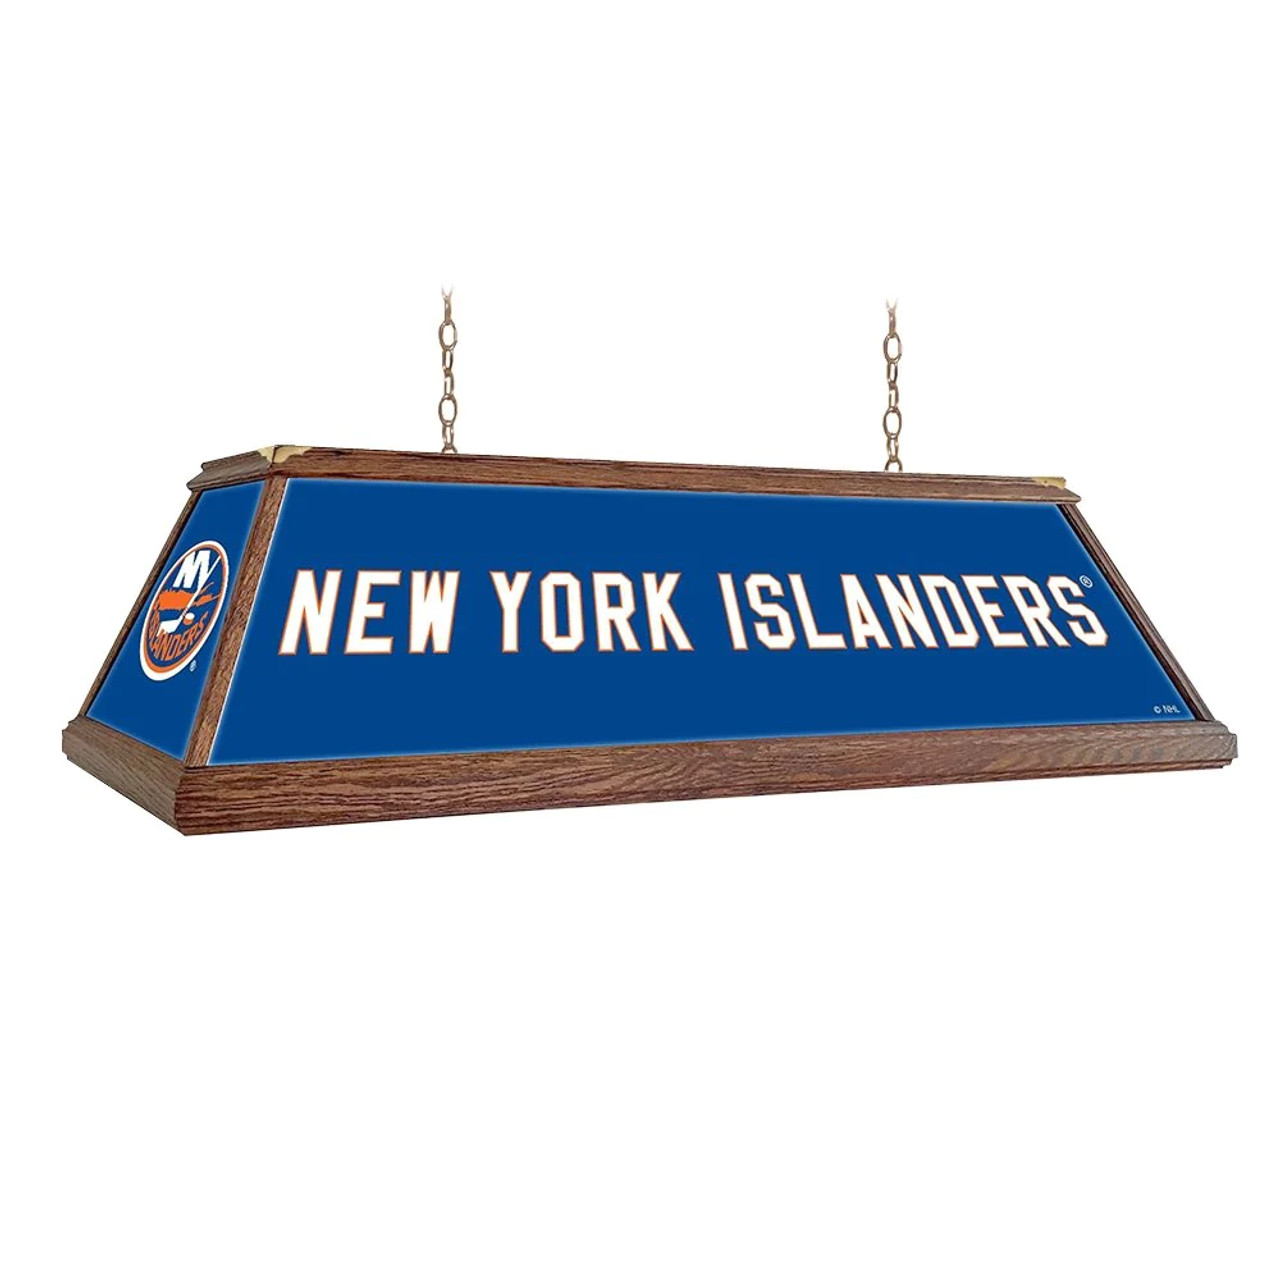 NY, New York, Islanders, Premium Wood, 4-ft, Florescent, Wooden, Pool, Billiard, Table, Light, lamp, NHL, The Fan-Brand, 686082114875